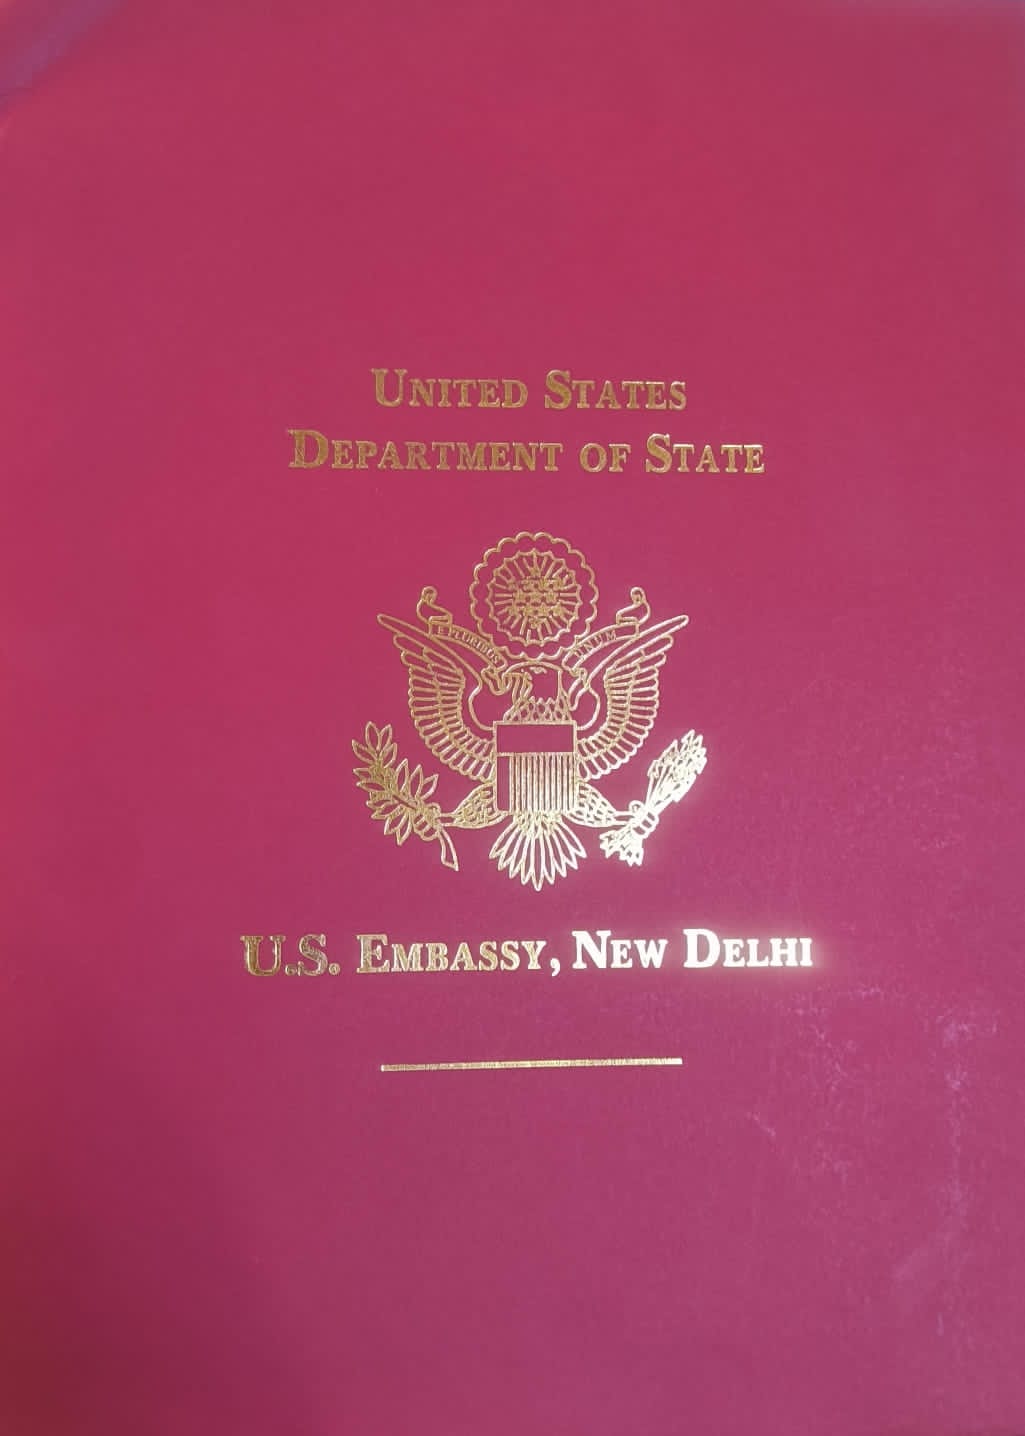 USA Embassy honored